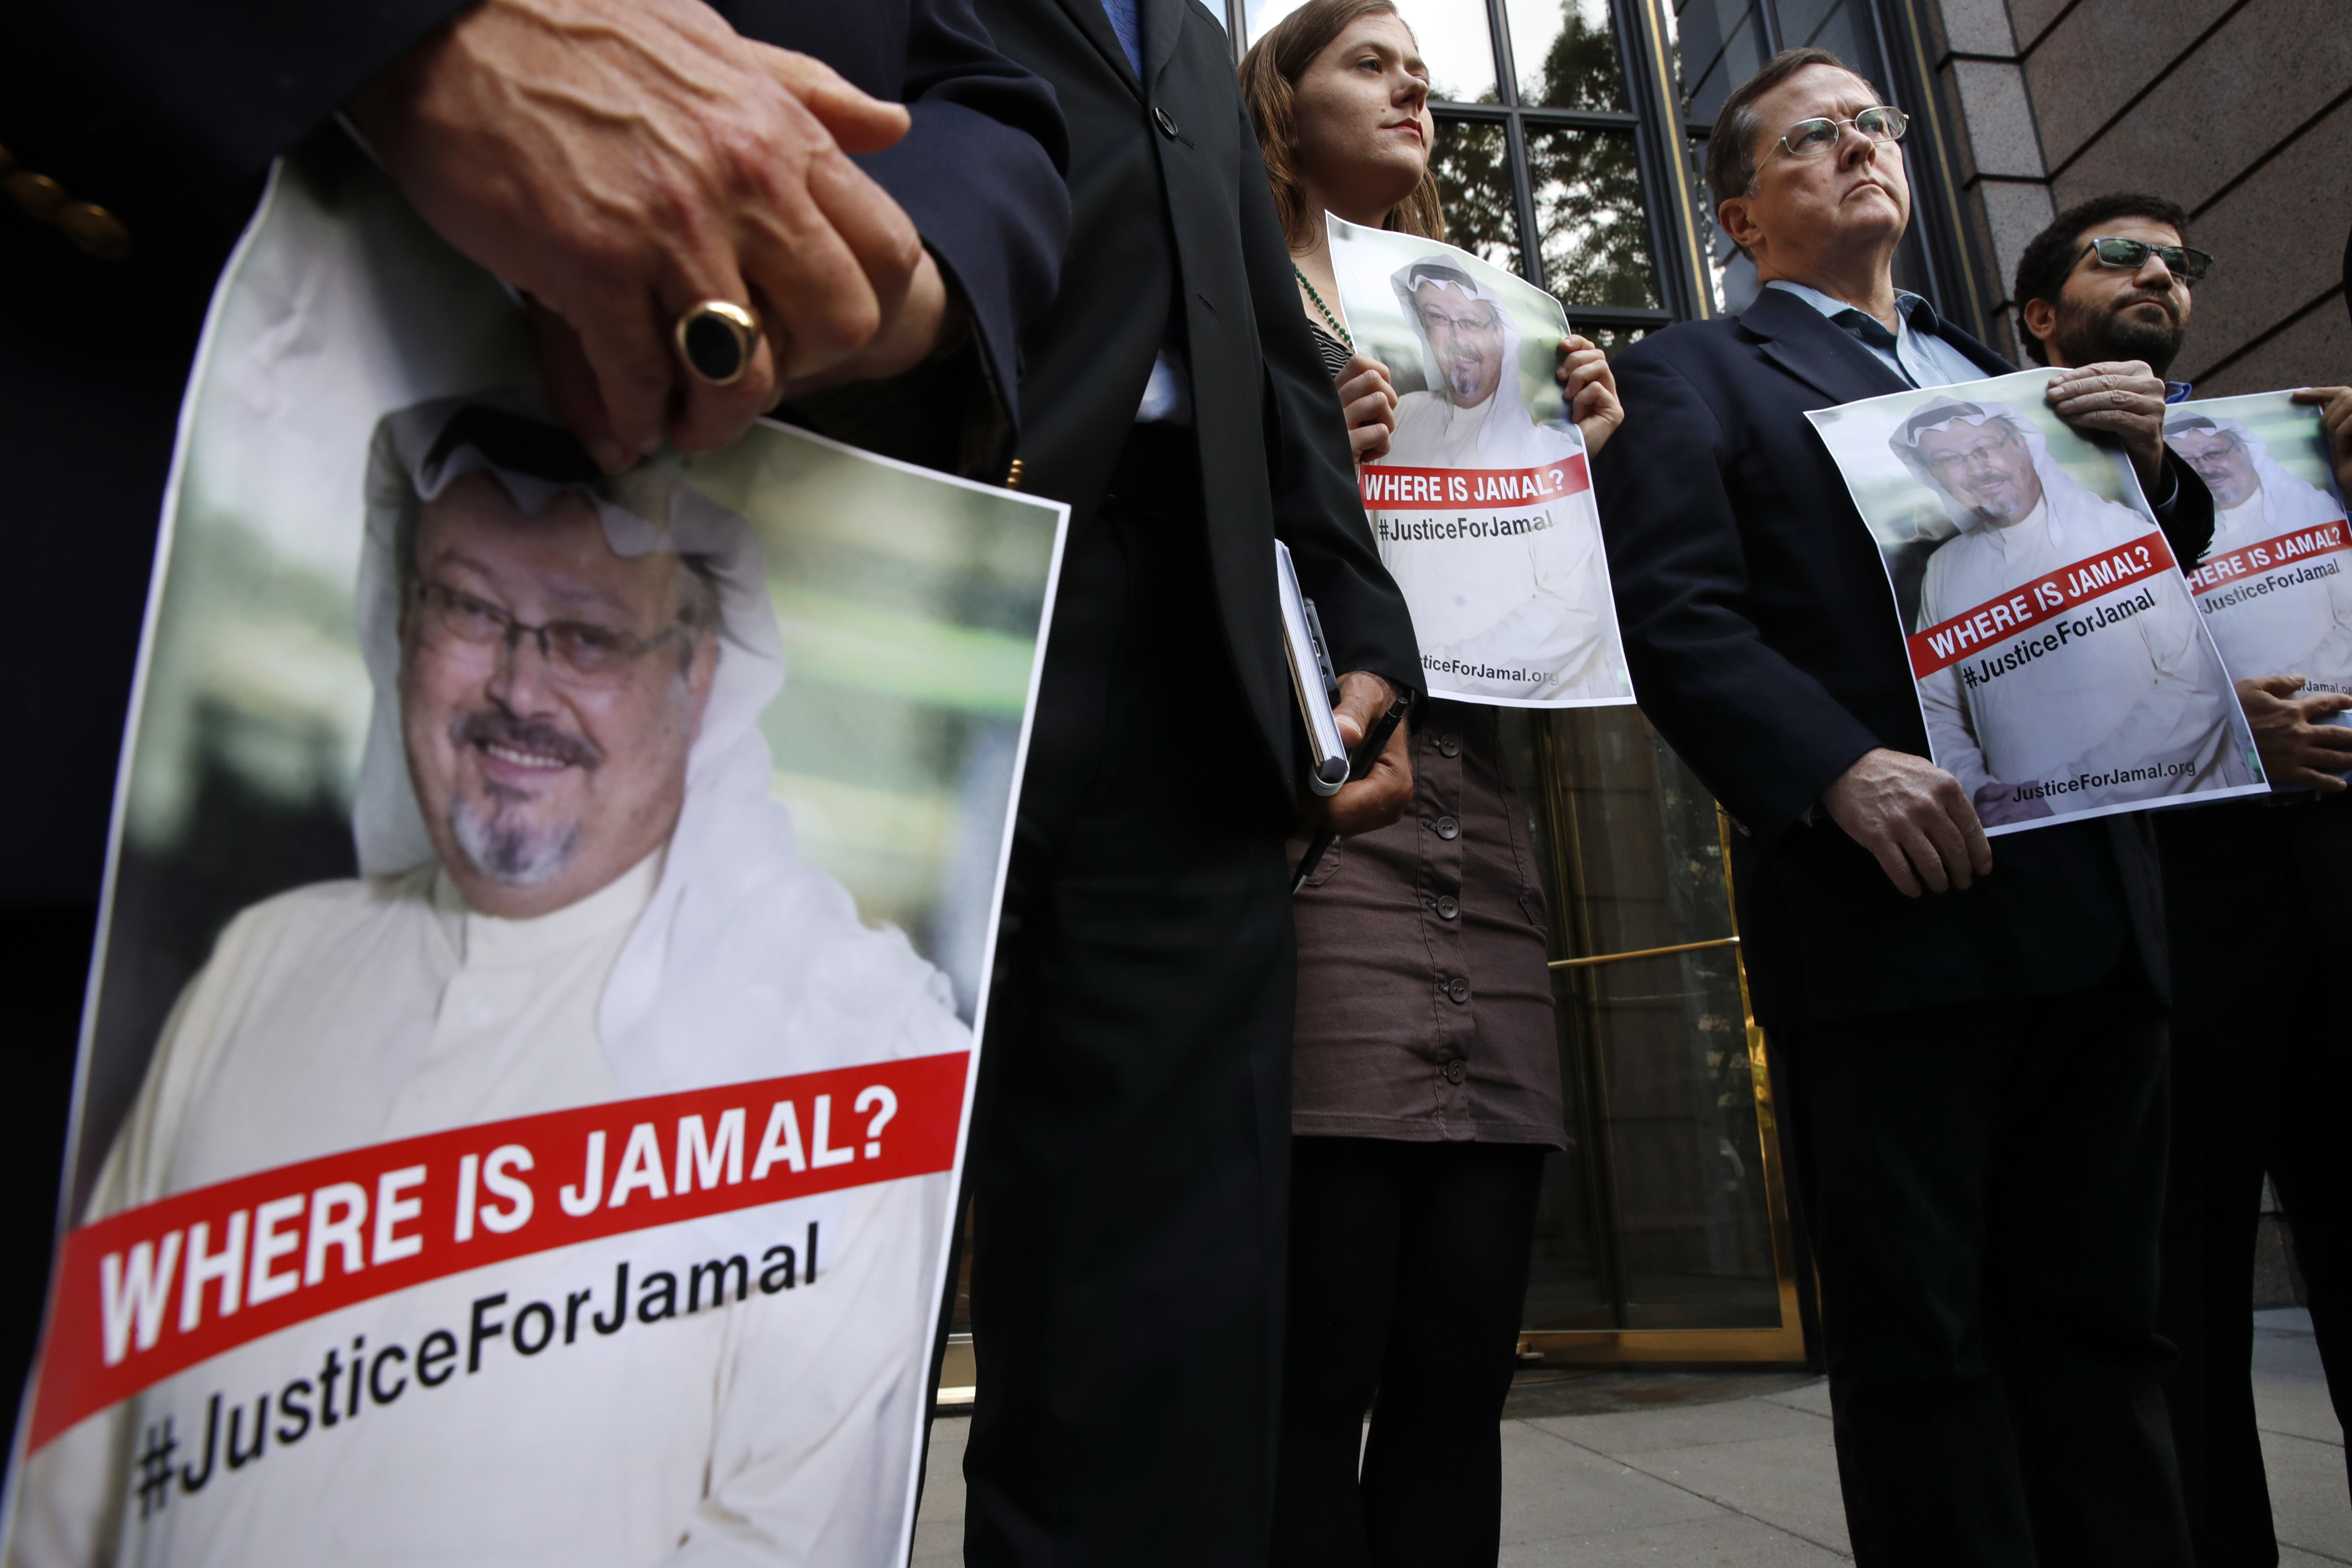 Statement by CEO Lansing on the disappearance of Jamal Khashoggi